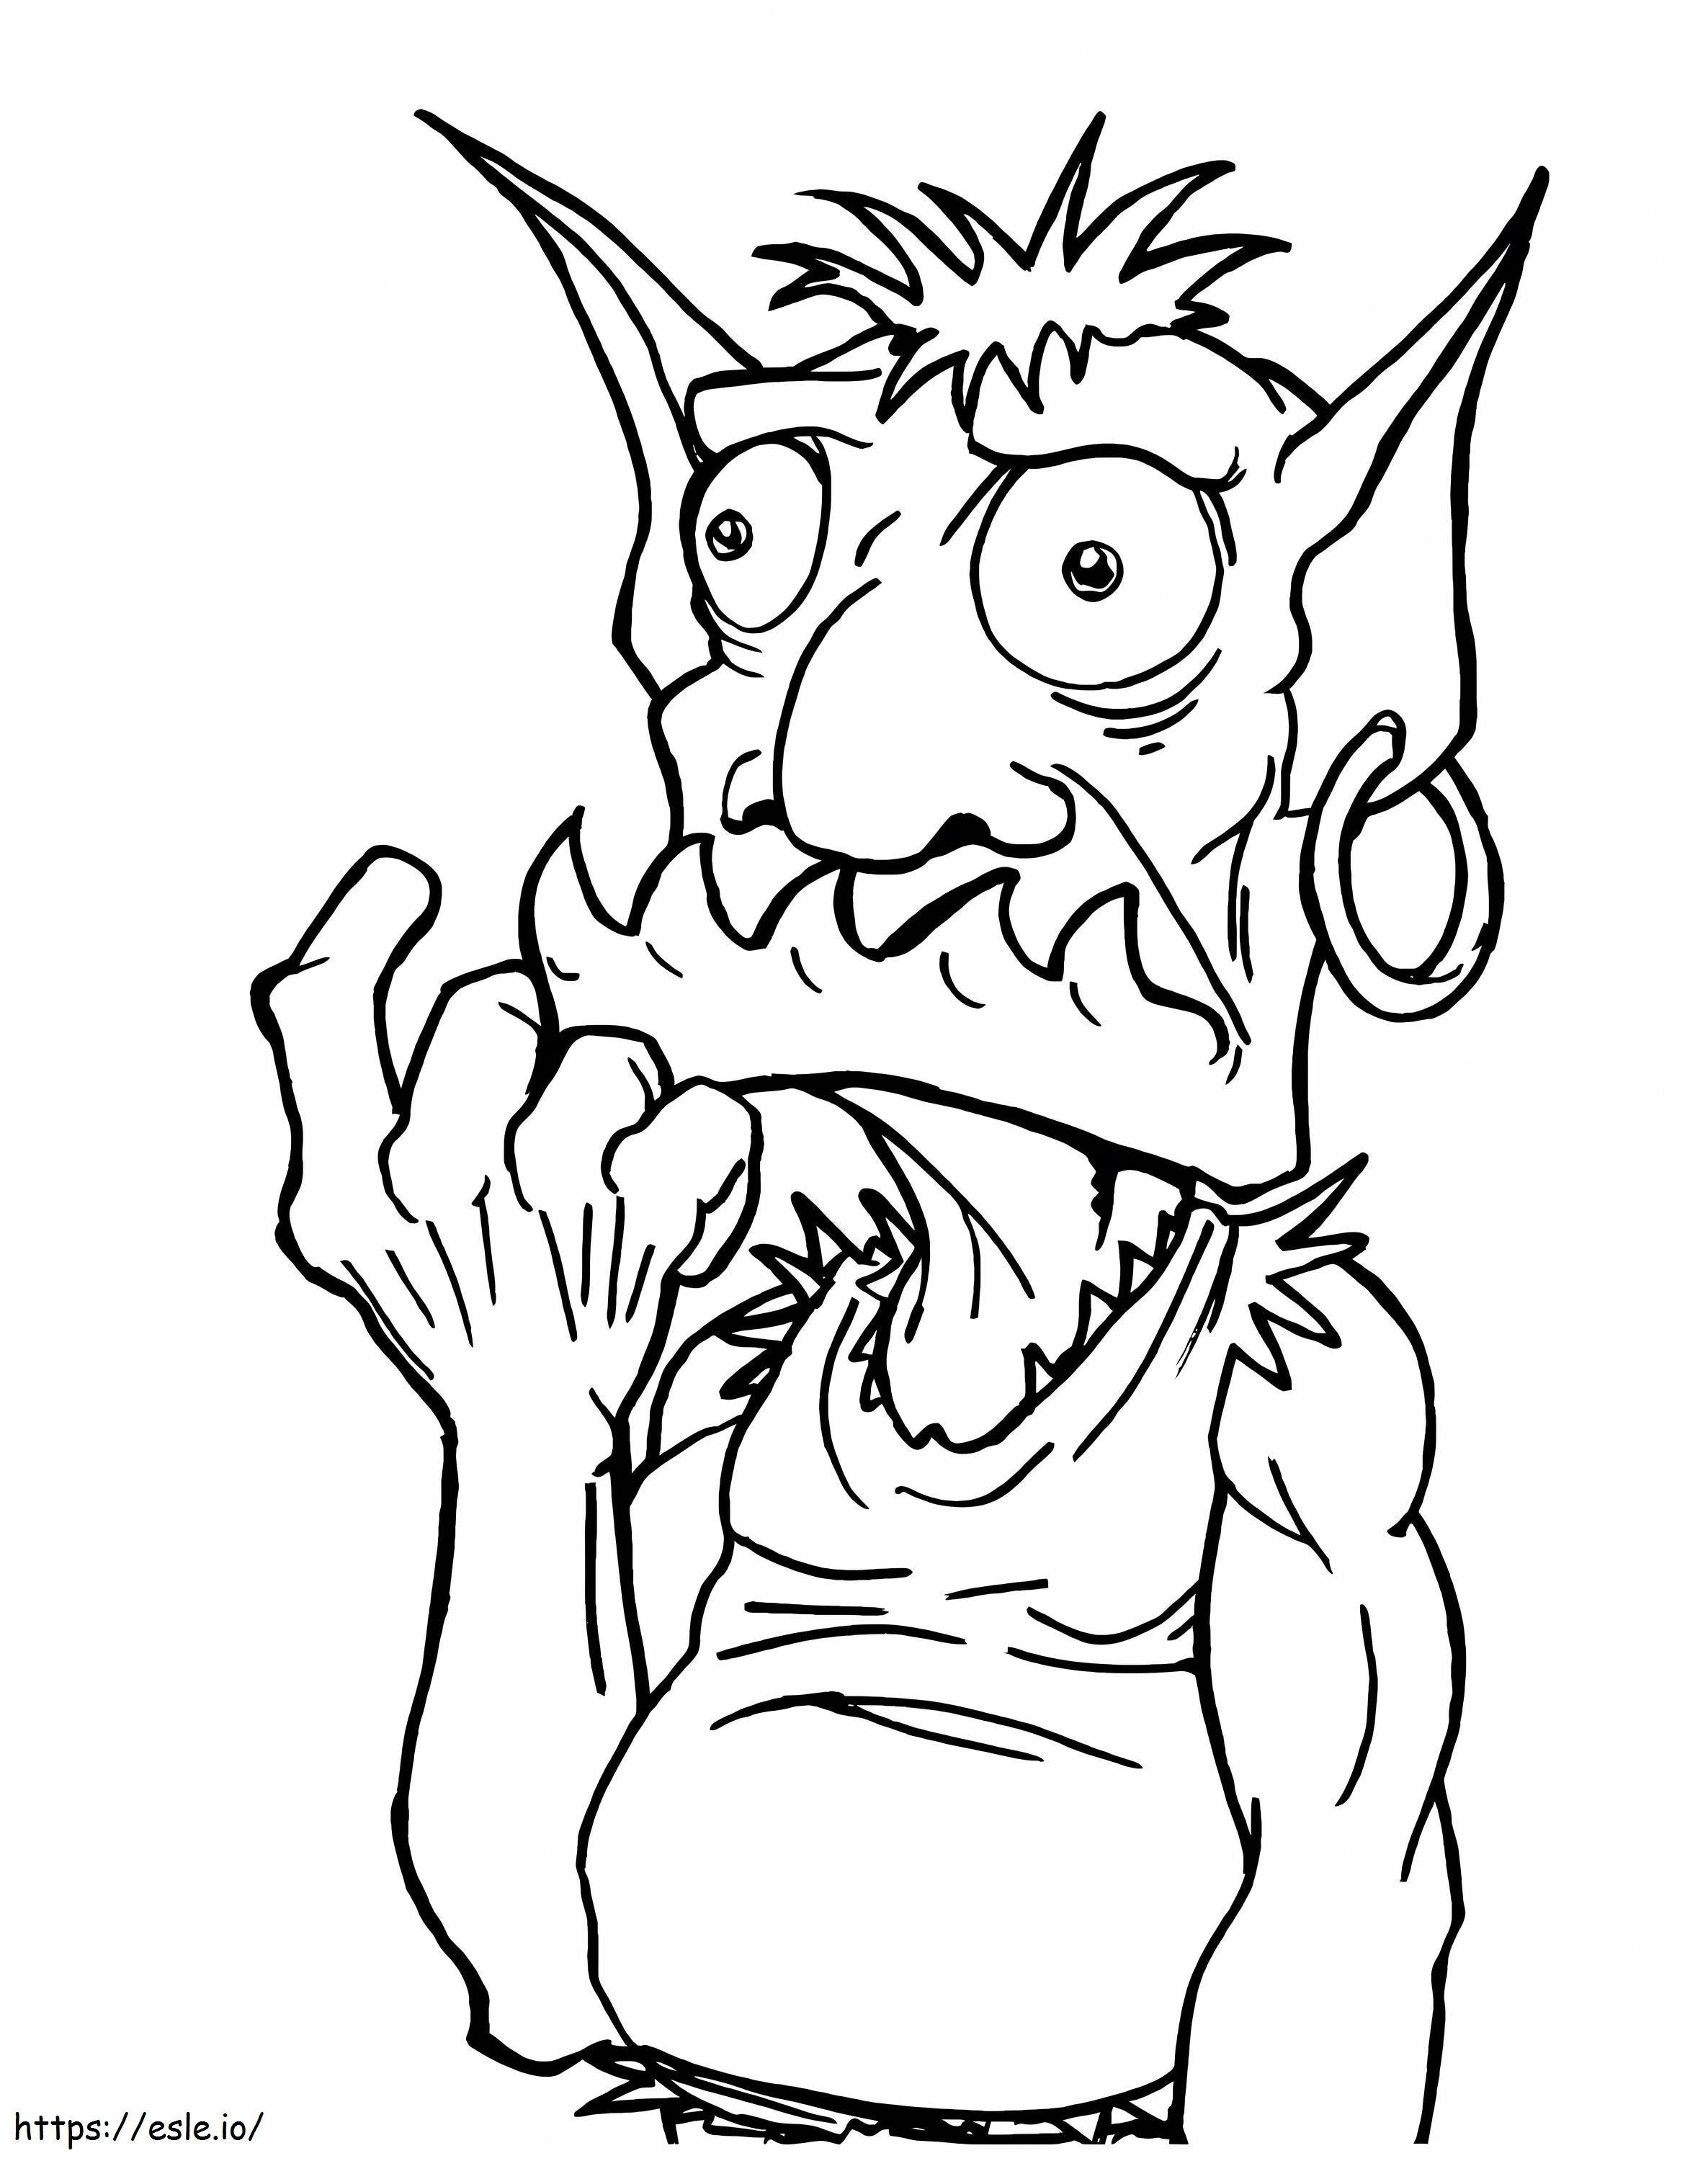 Goblin Portrait coloring page